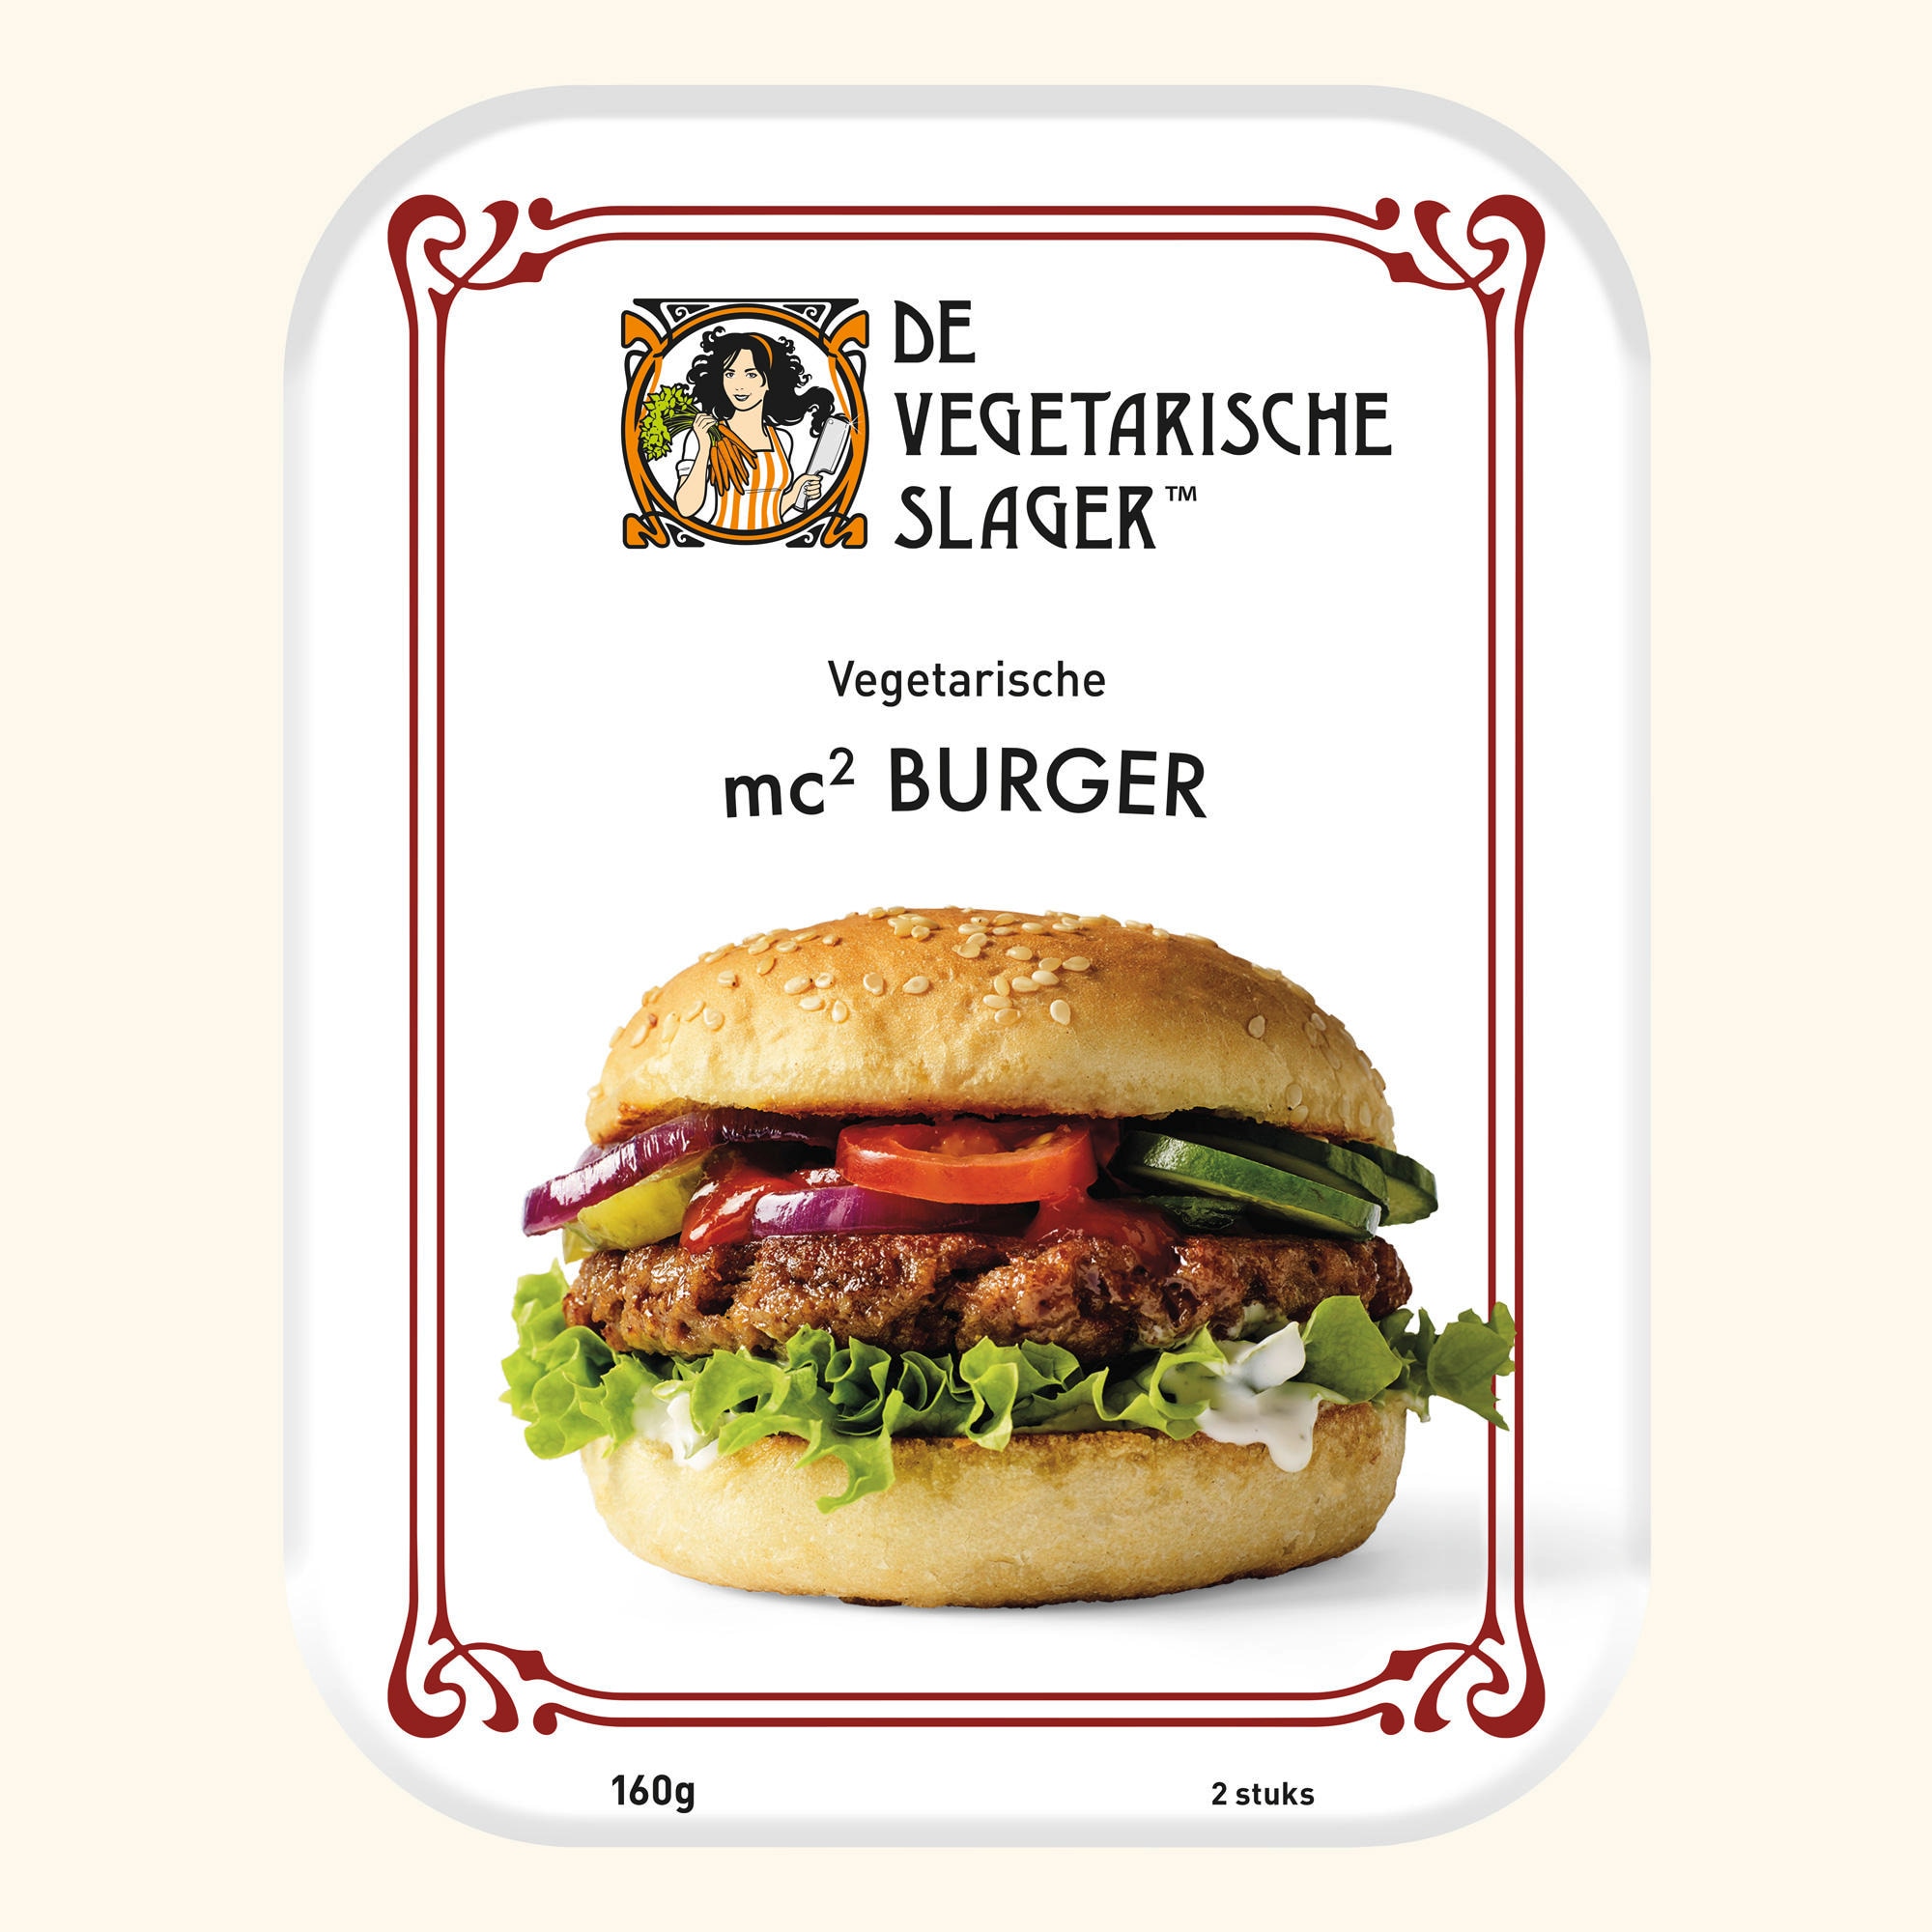 MC² Burger